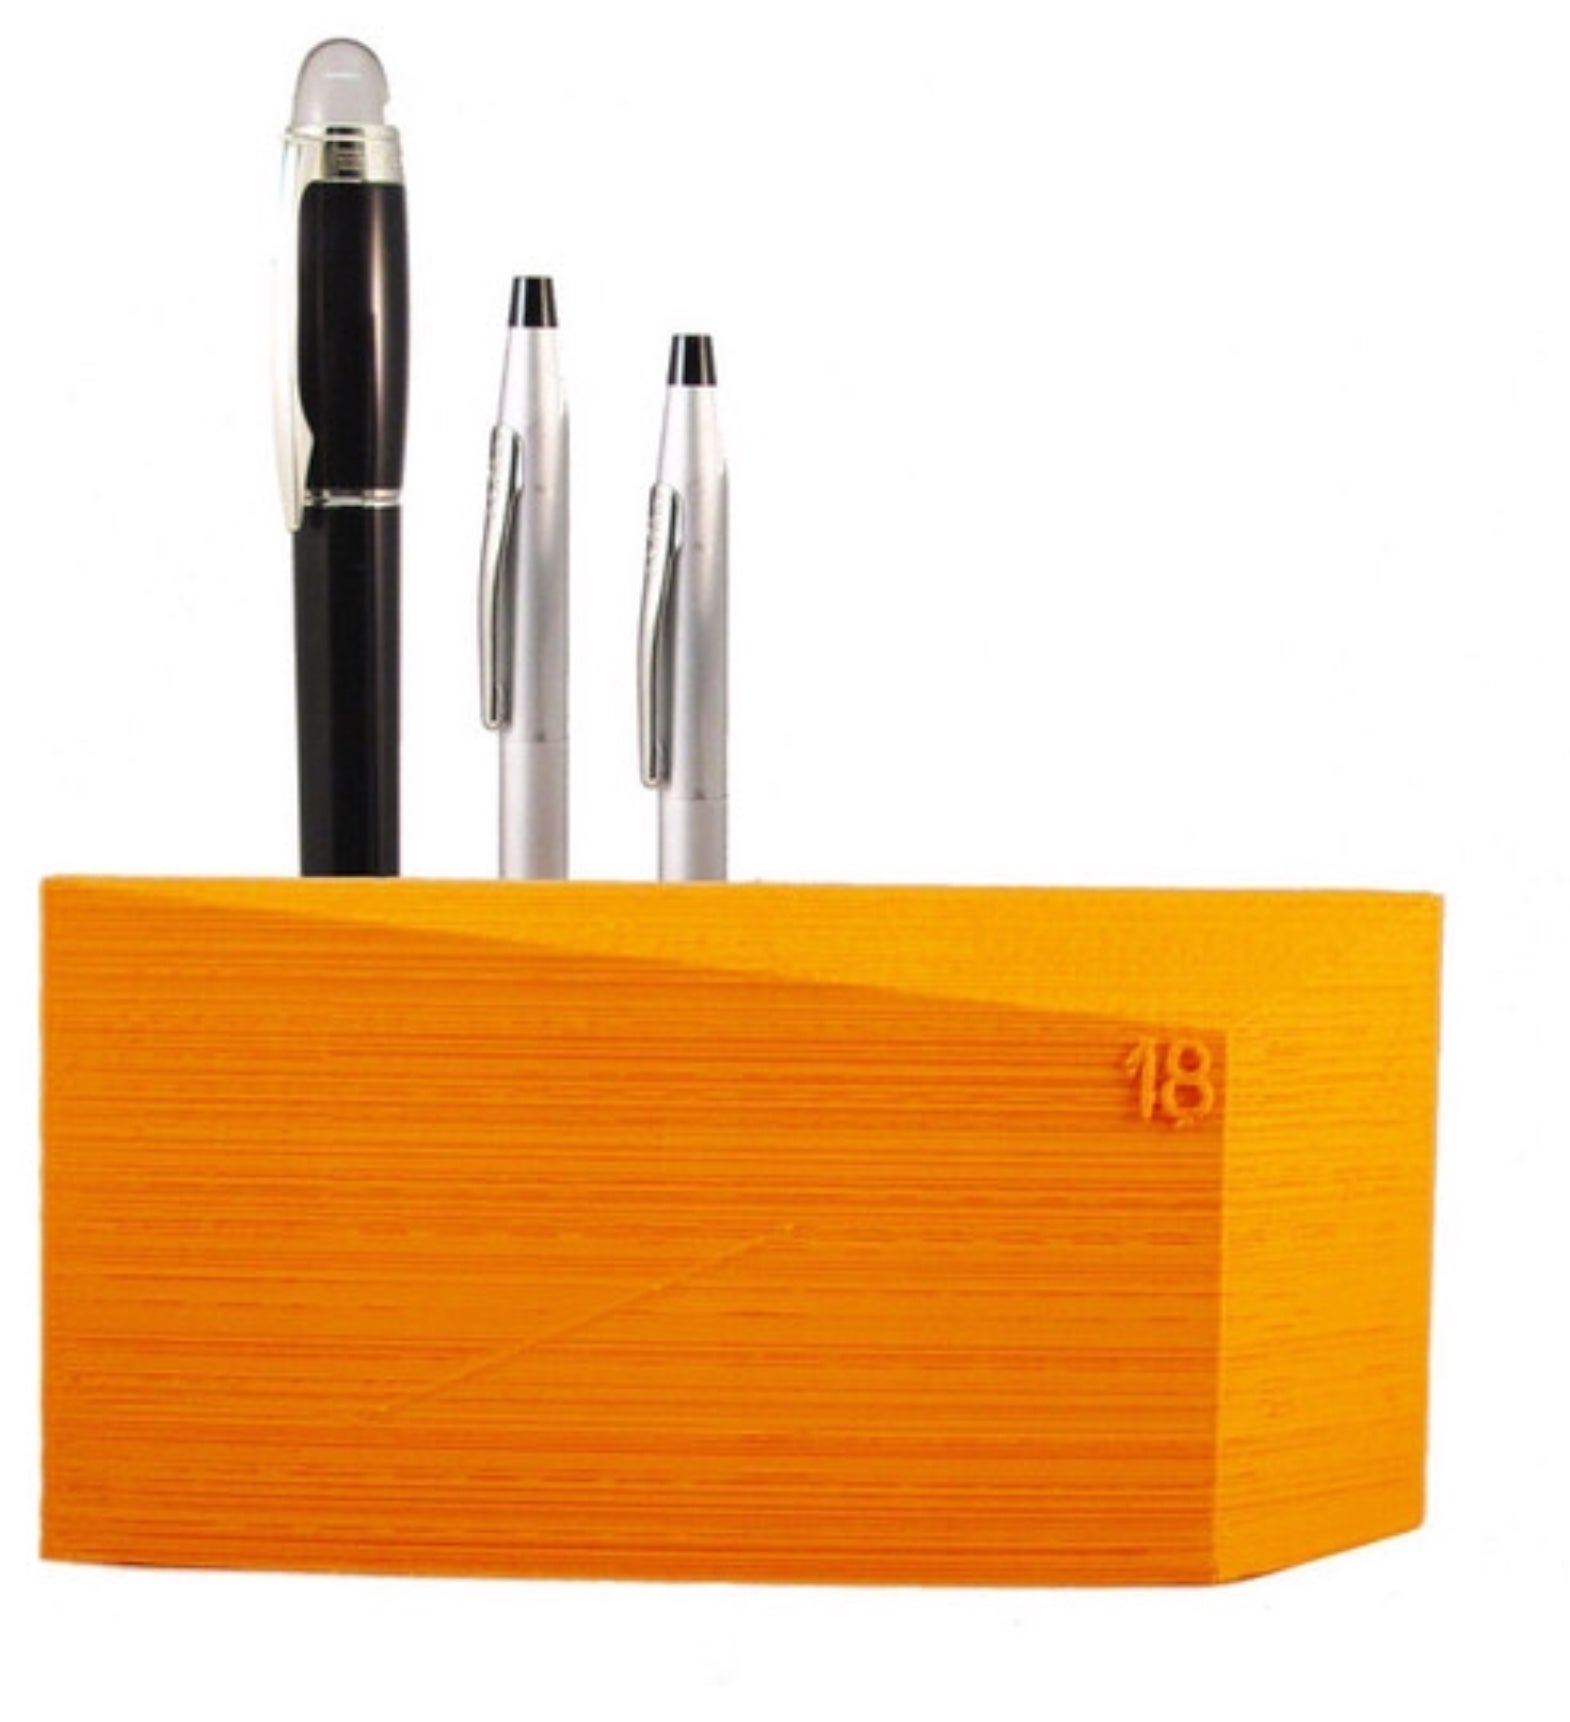 Honeycomb Desk Organizer Pen Holder / Pencil Holder / Planner / Pen Holder  / Desk Organizer / Bees / 3D Printed -  Denmark